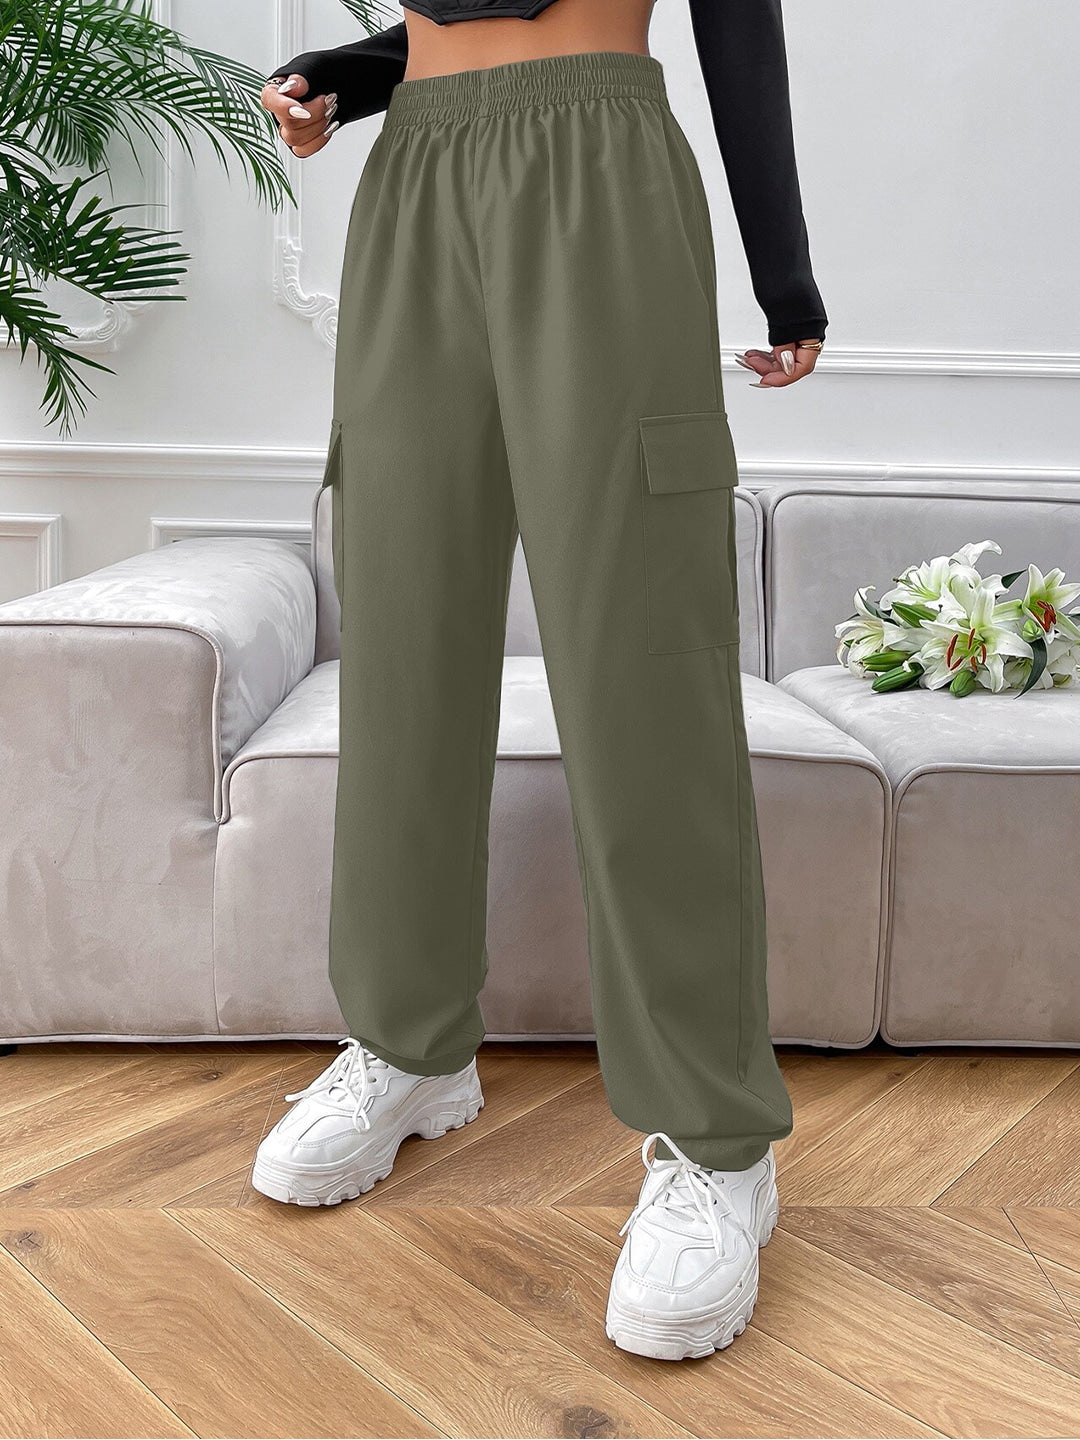 Slip-on Trousers Essential, Safetywear - SafetyOne